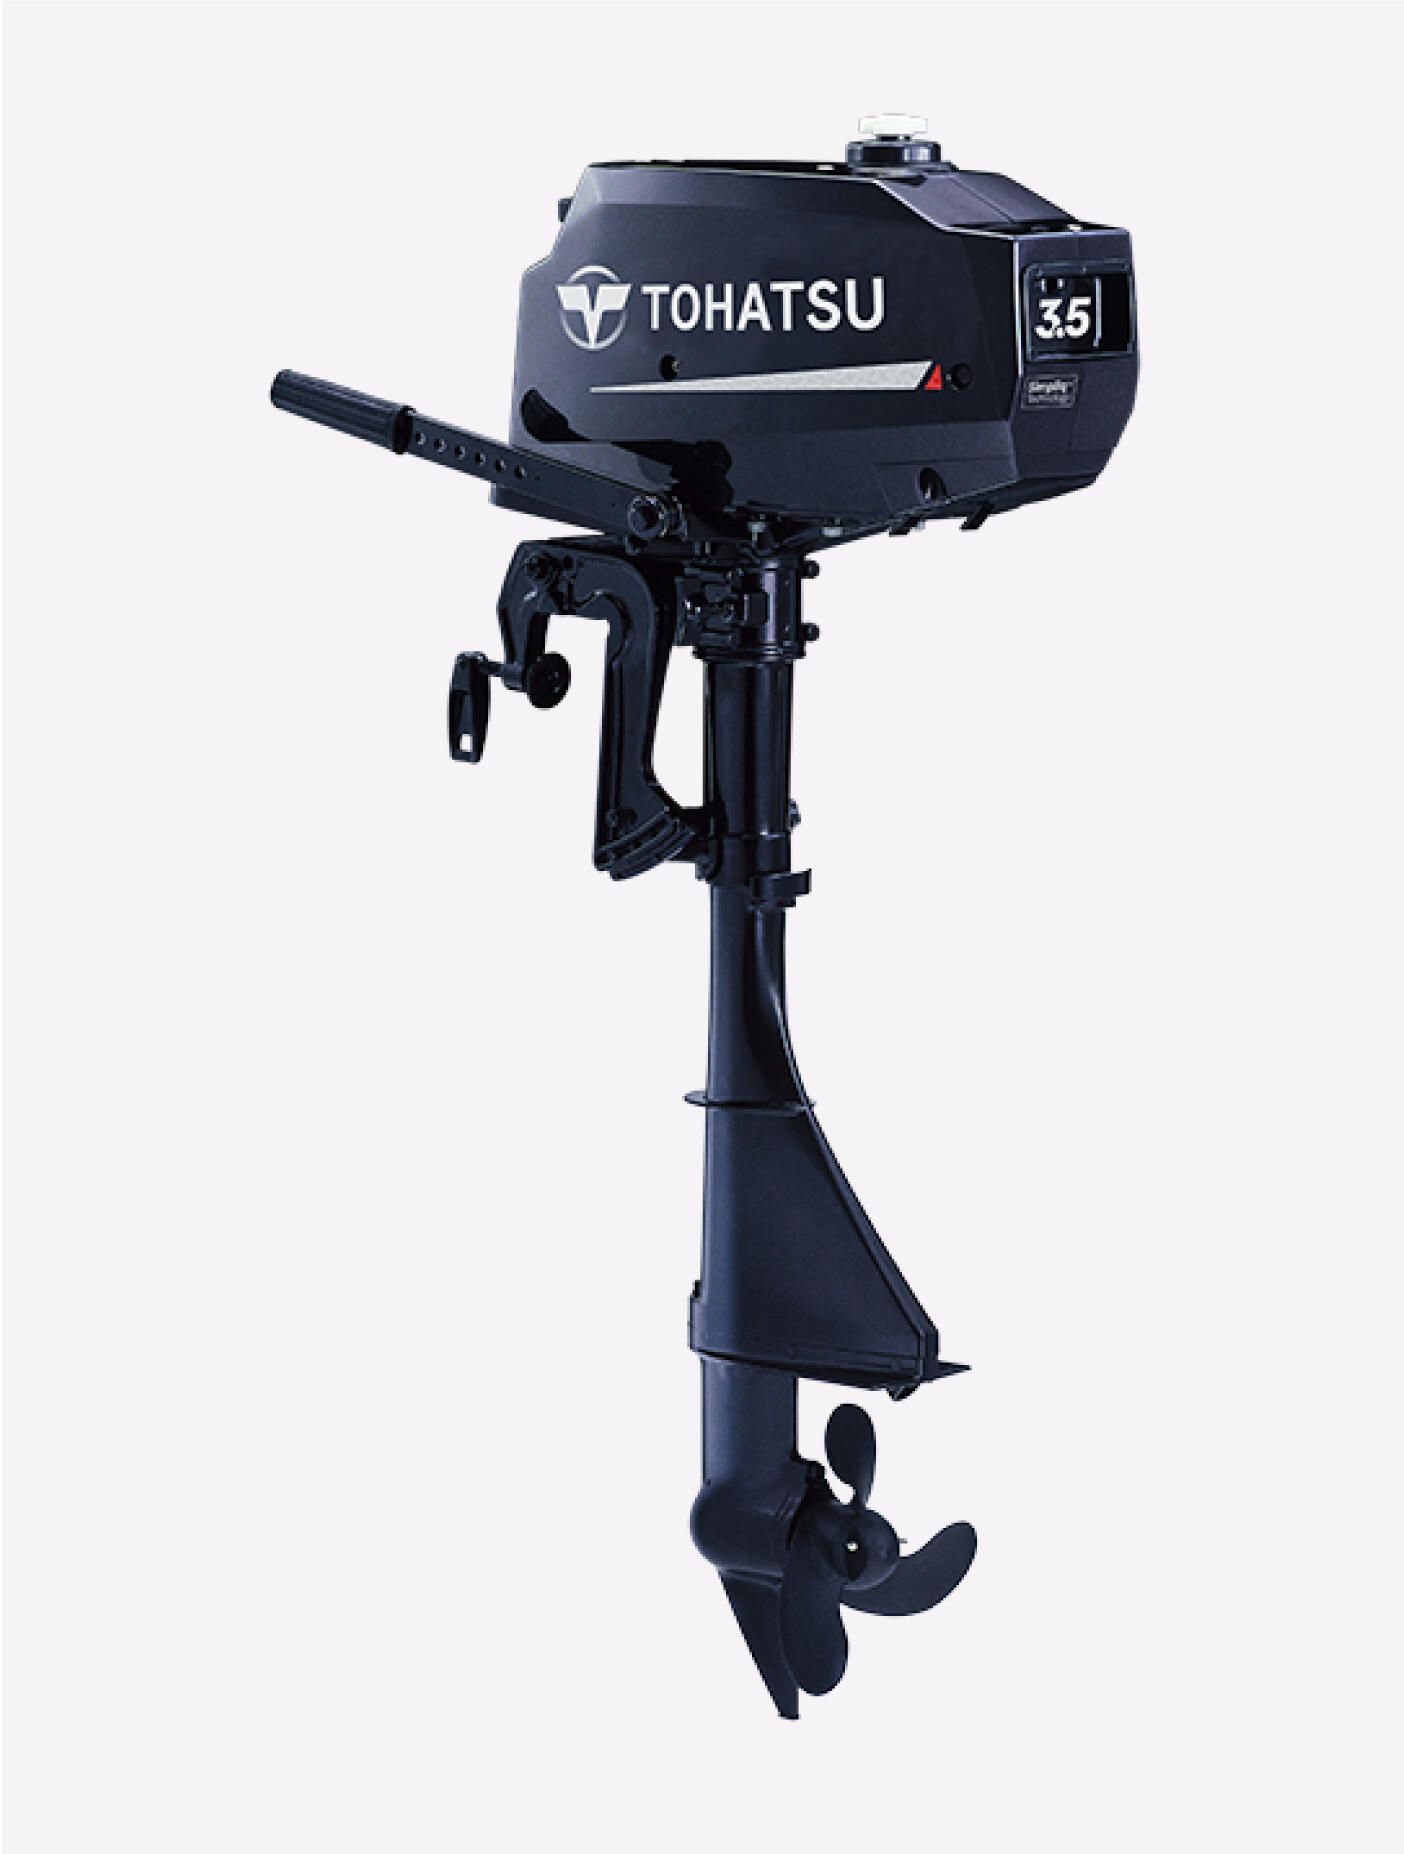 Tohatsu Outboard Motor M3.5A2/B2 (Portable)